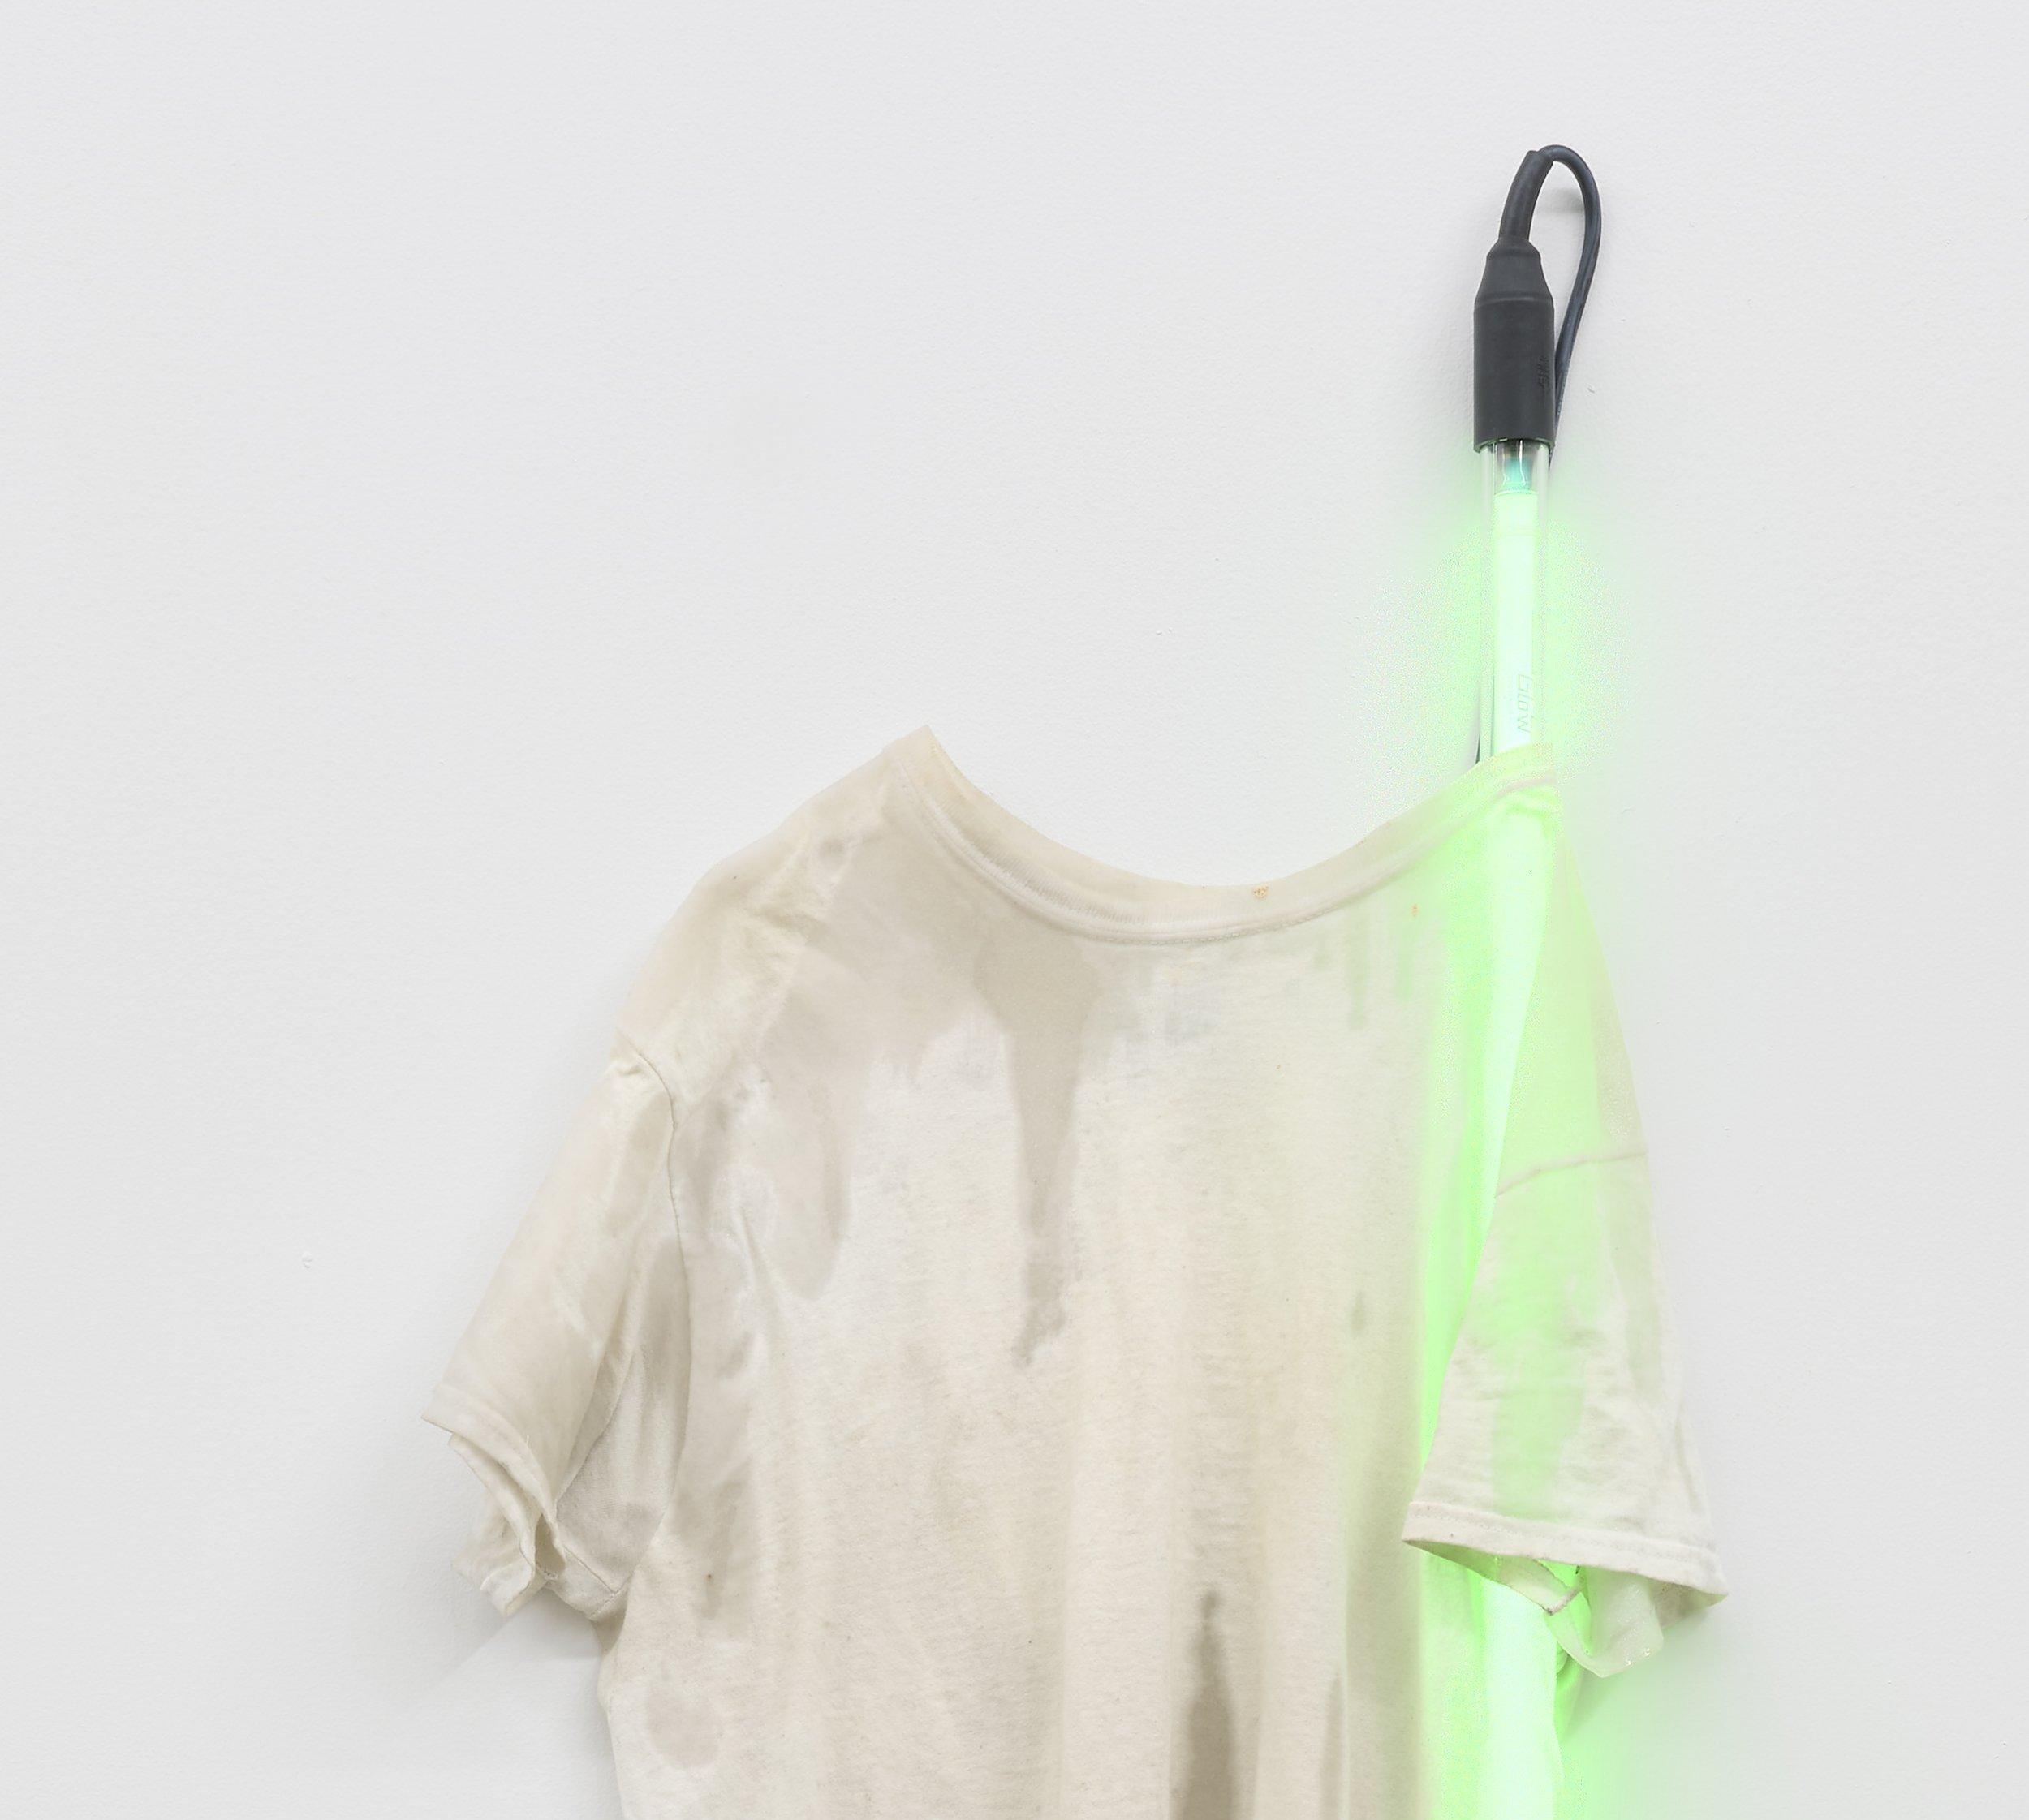  Dominic Palarchio  Untitled , 2021 (detail) cotton t-shirt, urethane resin, automotive under body neon,  transformer, hardware 54 x 19 x 4 in (137 x 48 x 10 cm) (DP3)  